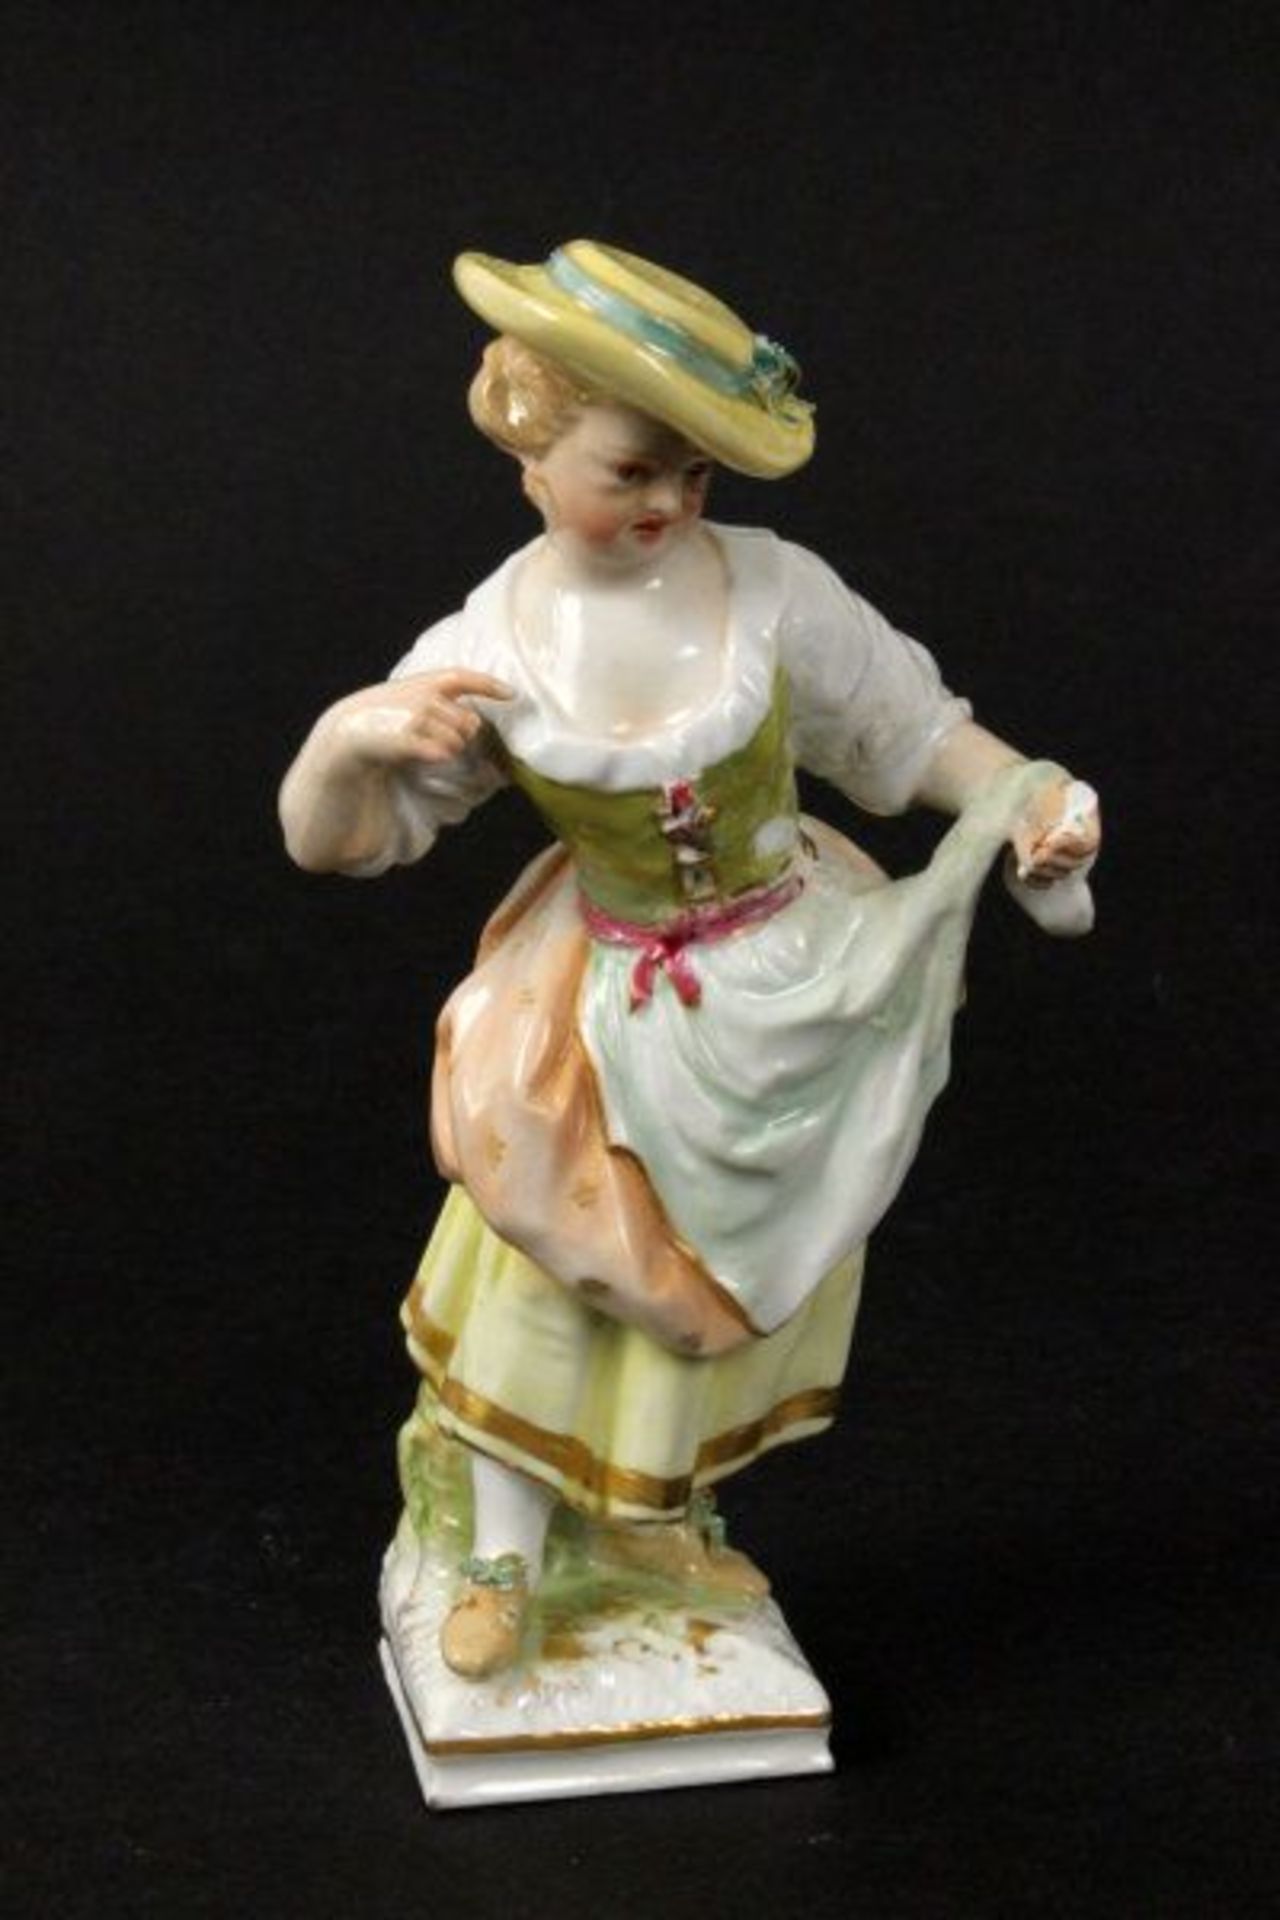 A BERLIN BOY GARDENER FIGURE KPM Berlin 1900 Coloured painted porcelain figurine. Scepter mark